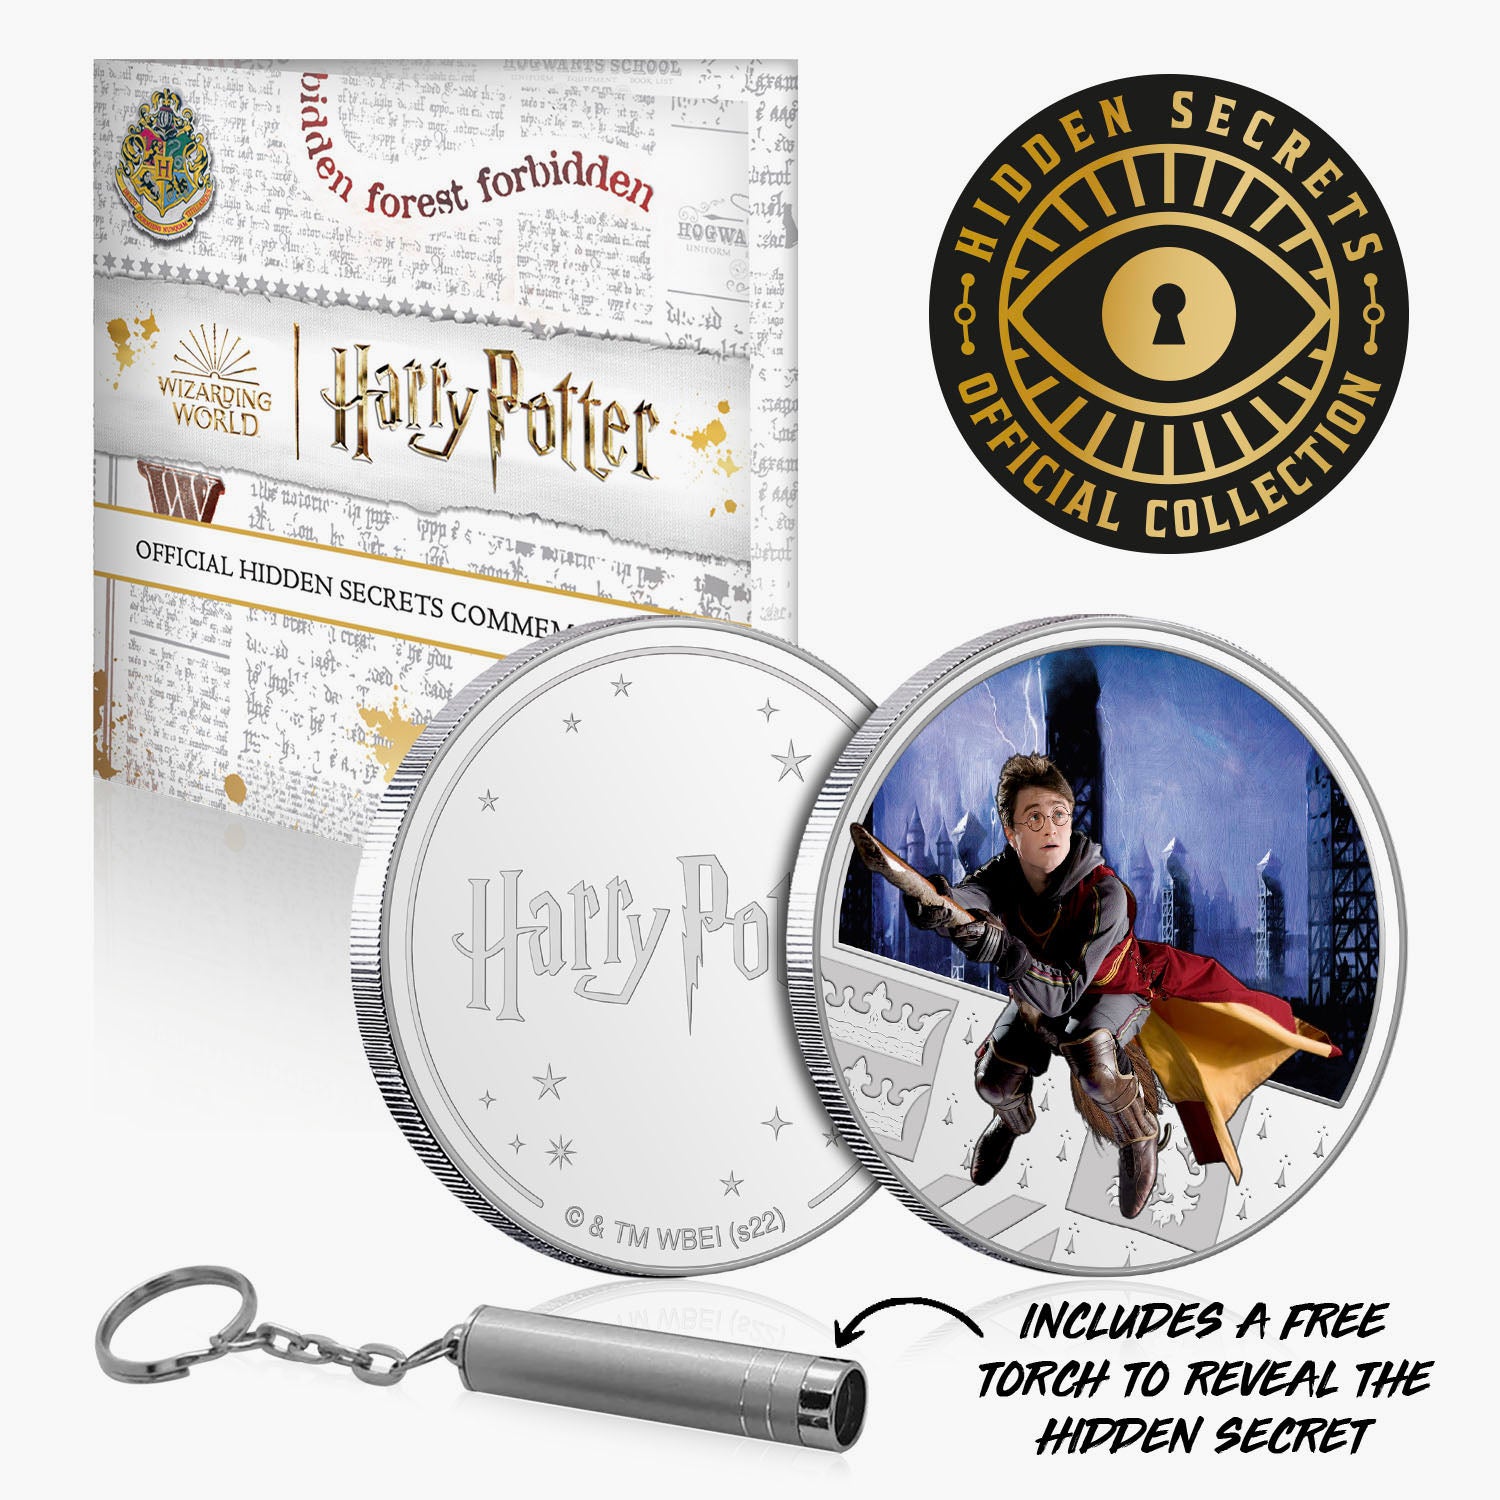 The Hidden Secret Official Harry Potter Commemorative